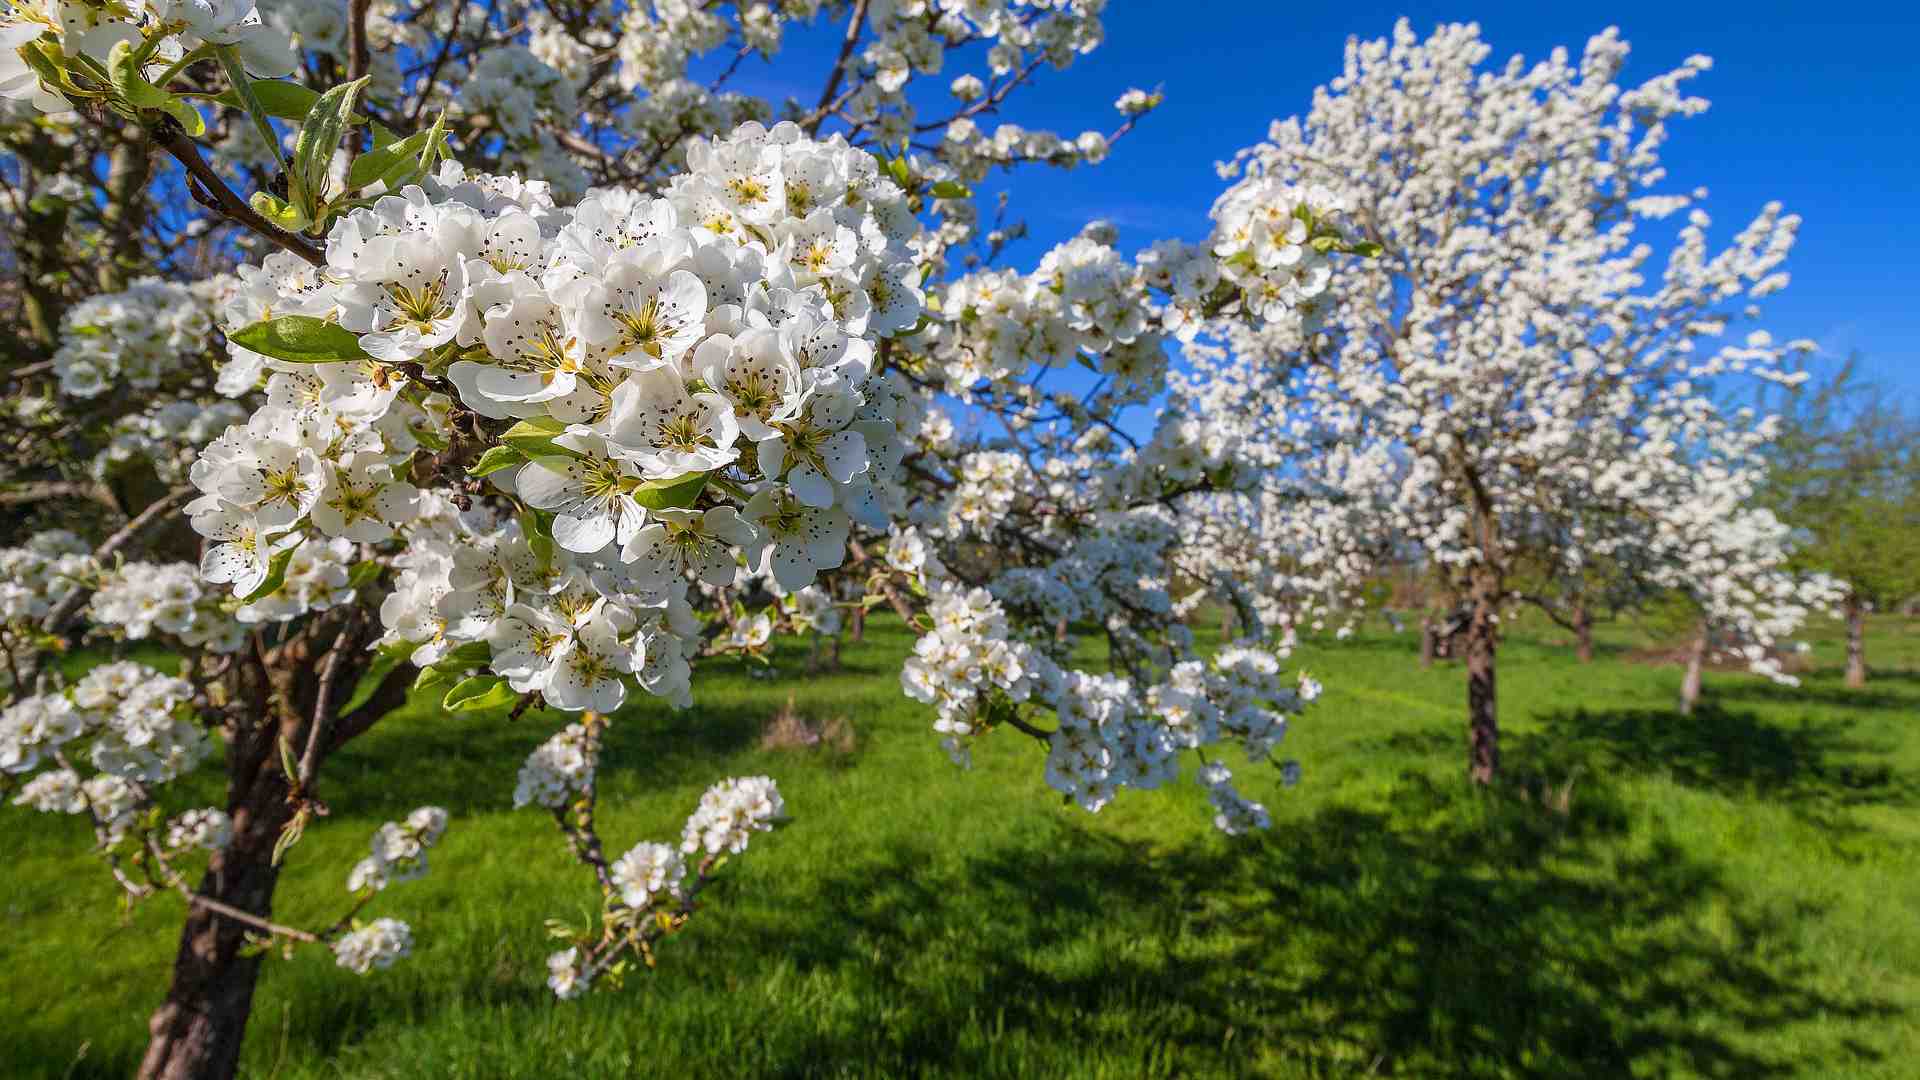 Streuobstwiese im Frühling. Foto: Lichtsammler / Pixabay.com